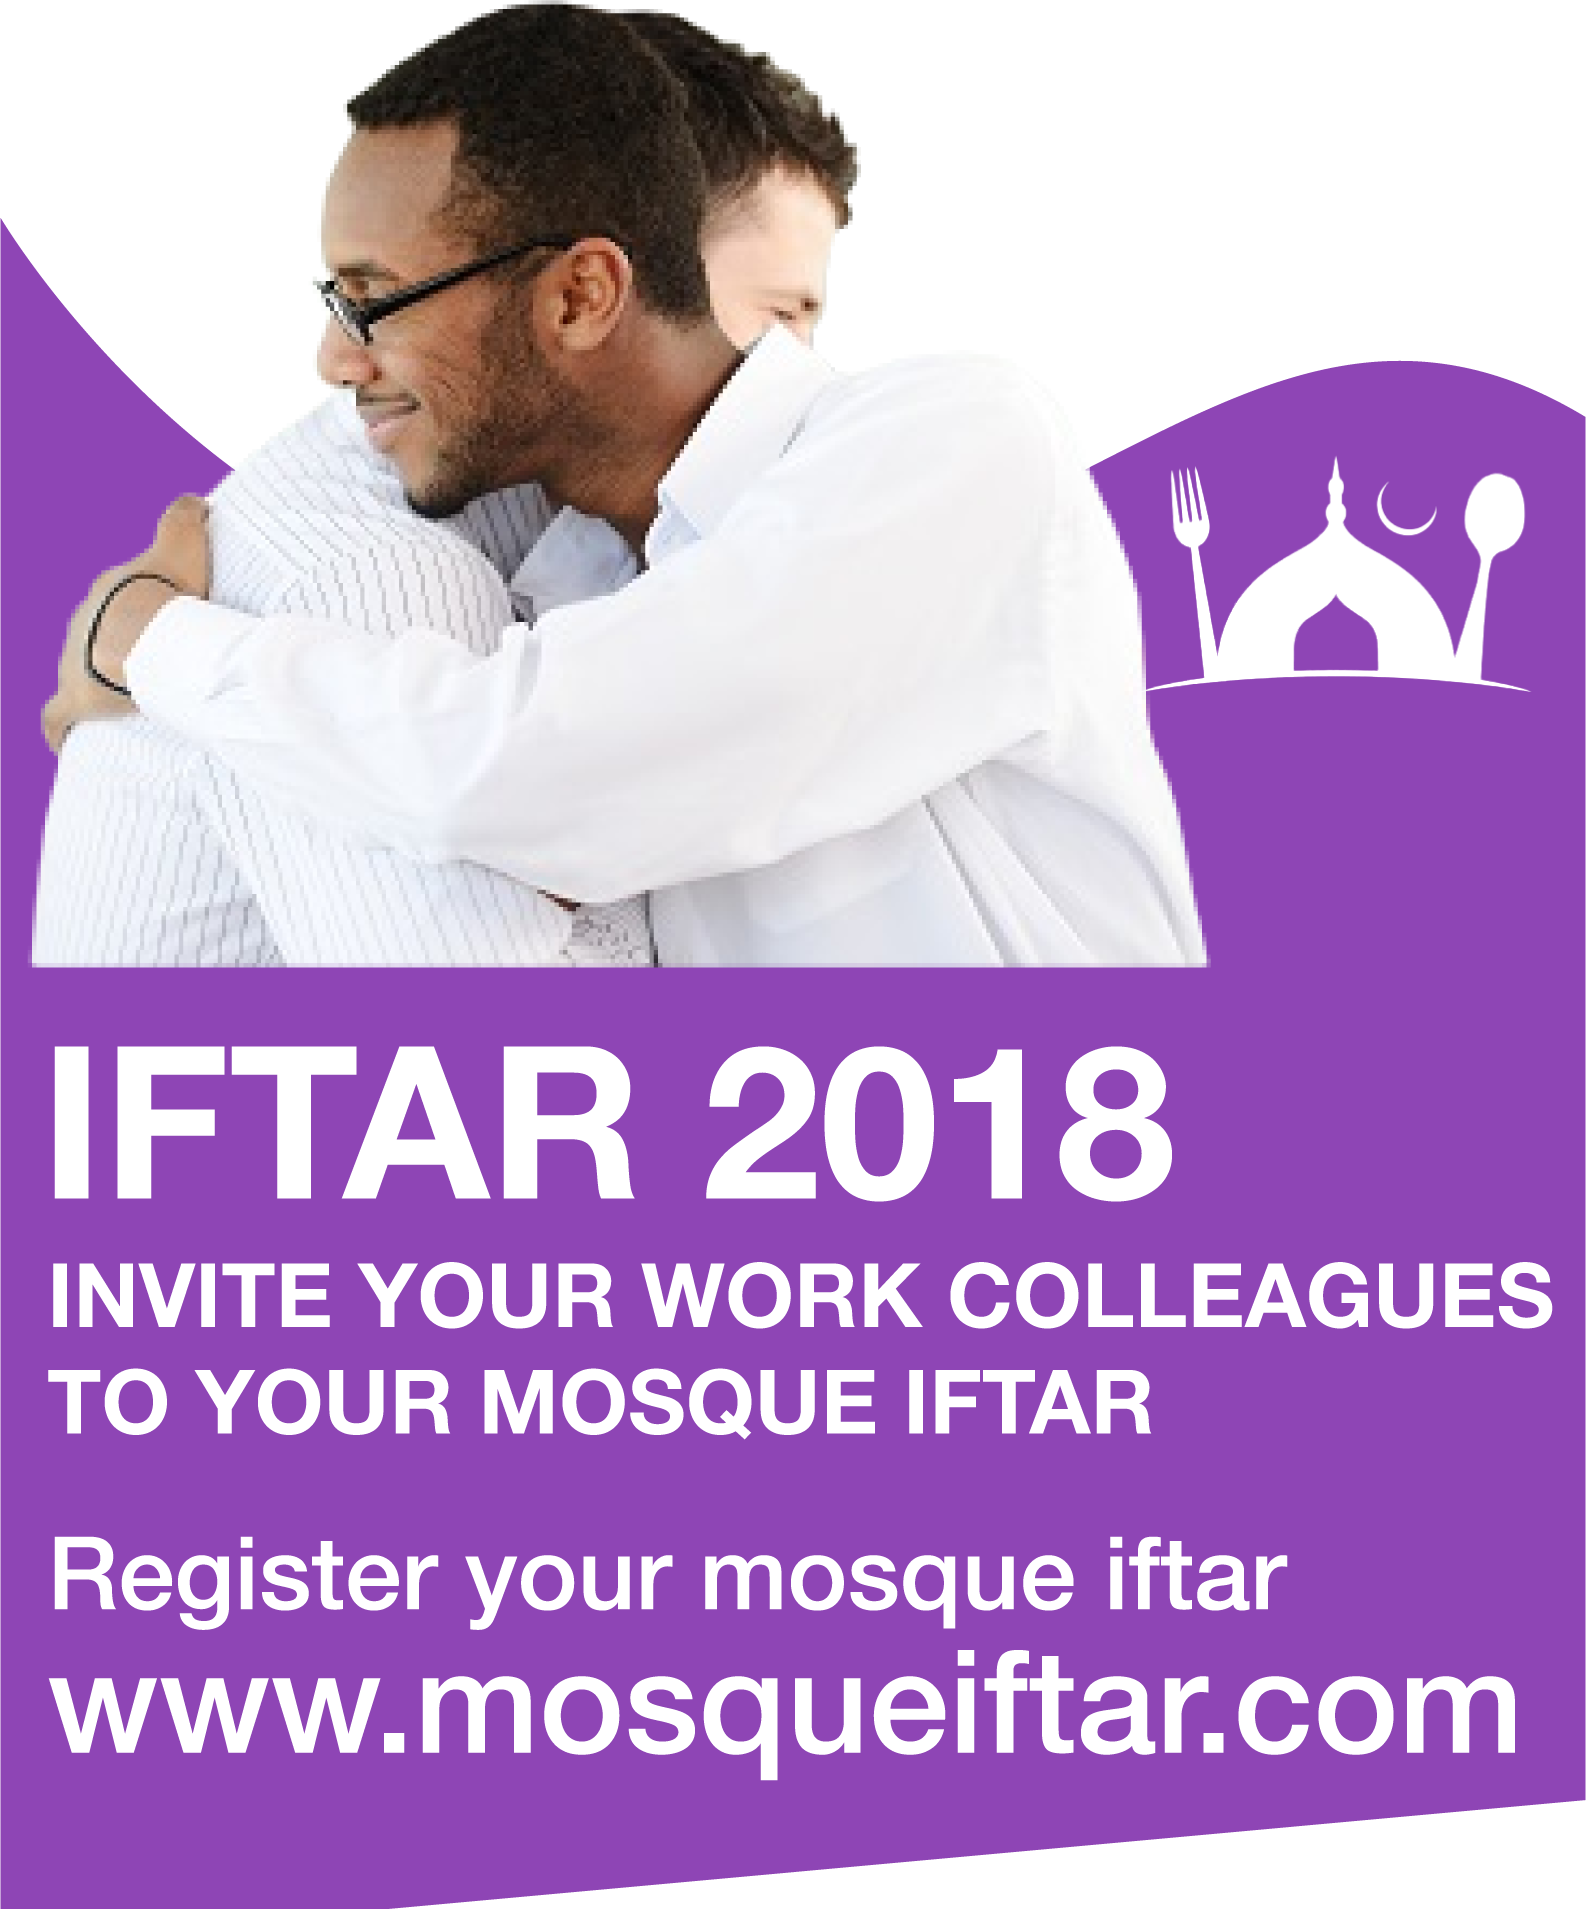 Mosque iftar collegues